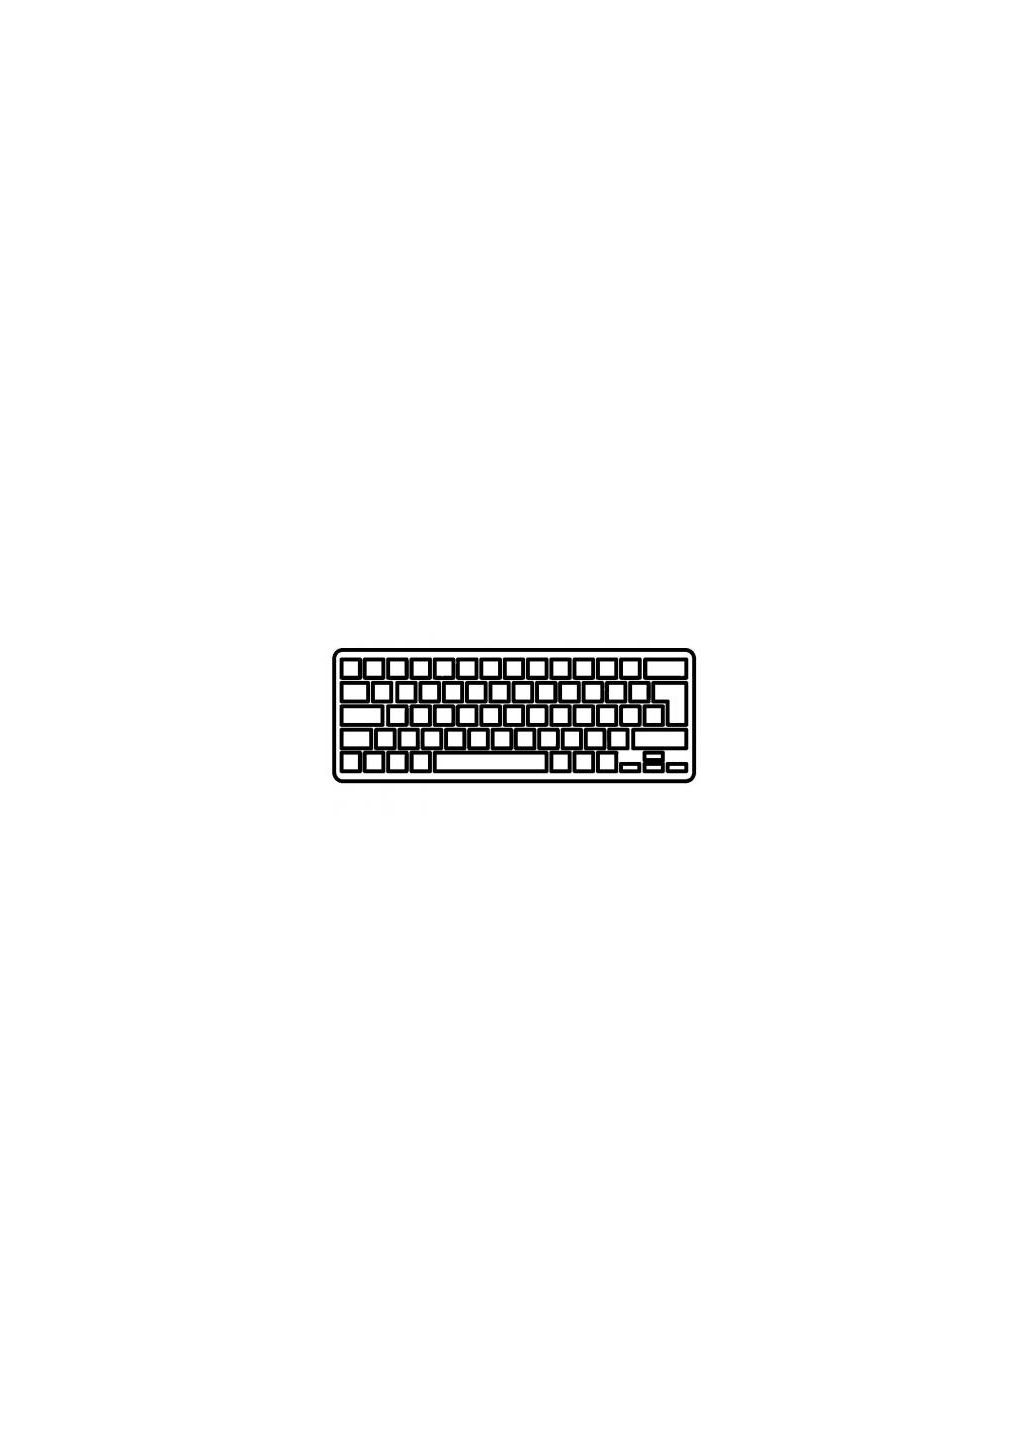 Клавиатура ноутбука Pavilion SleekBook 15BS/15-BW черн. без рамки UA/RU/US HP pavilion sleekbook 15-bs/15-bw черн.без рамки ua/r (276706759)